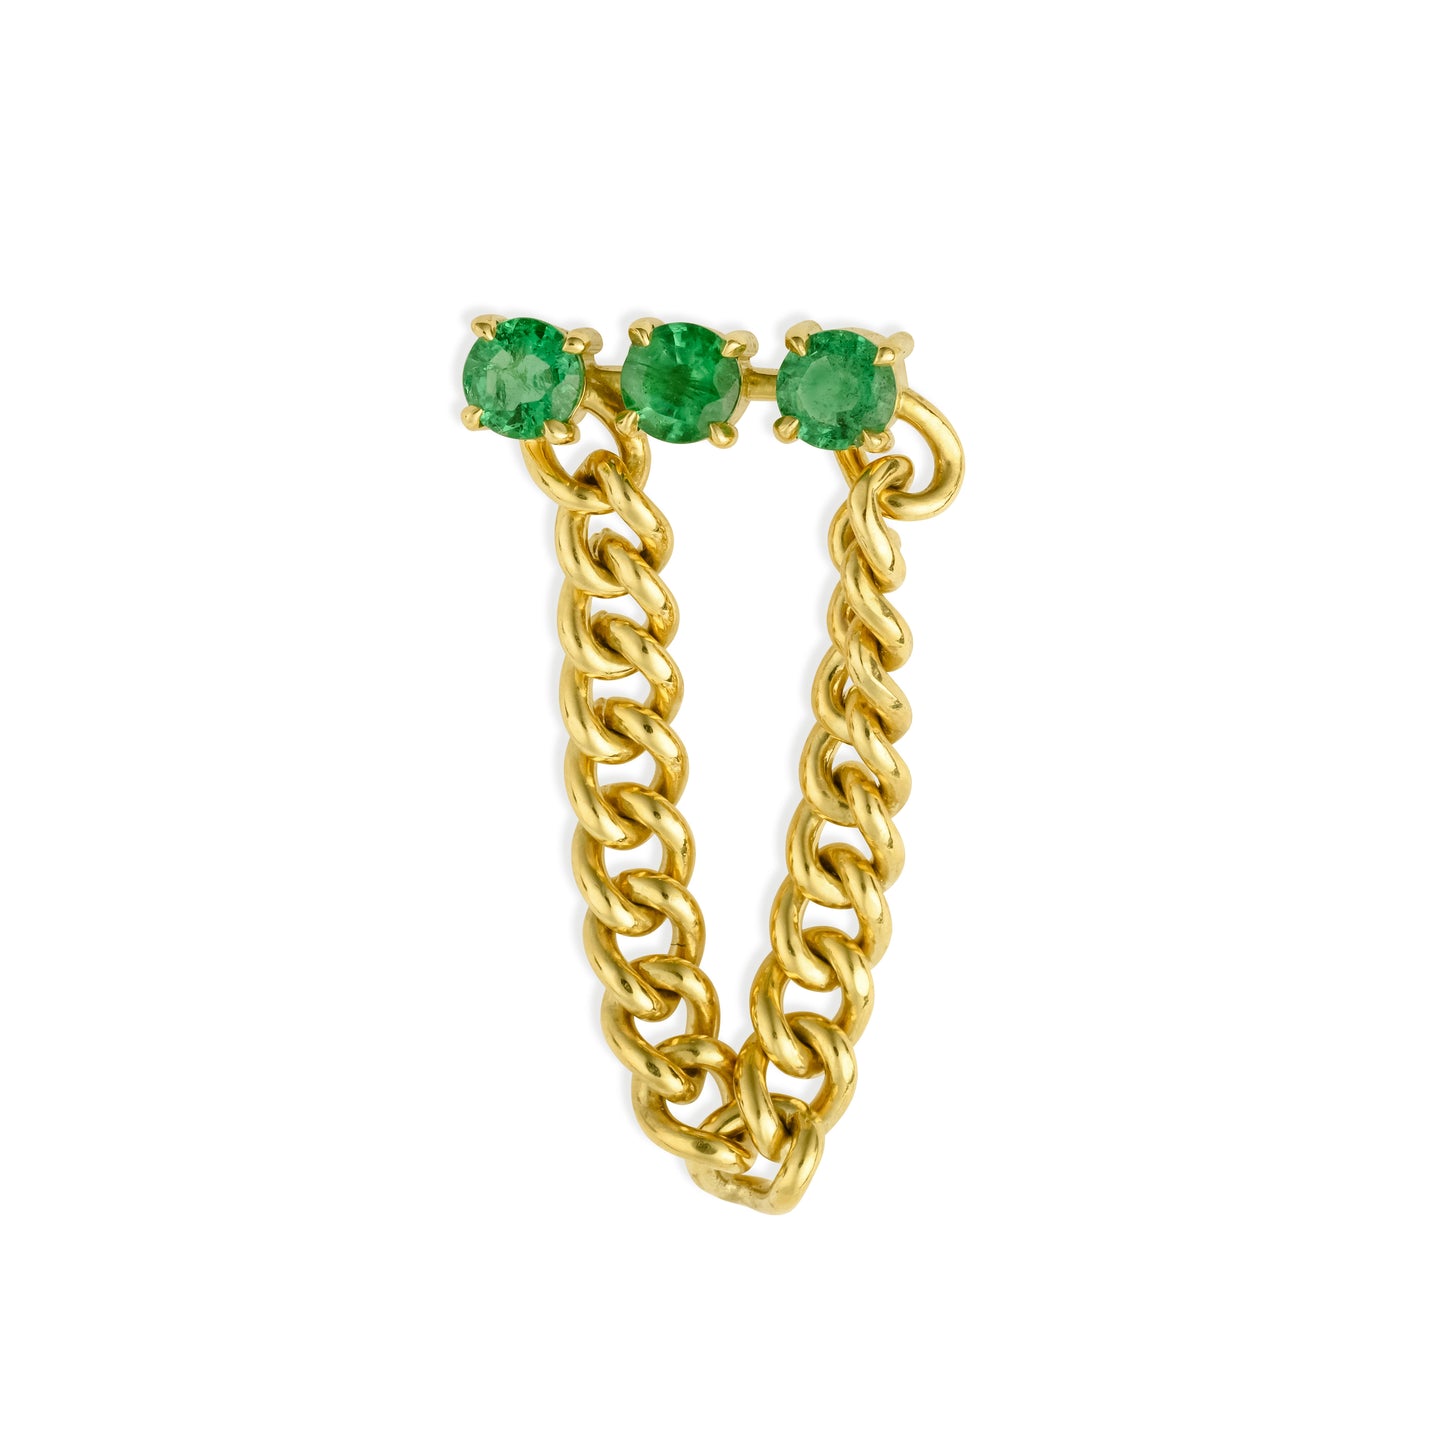 Jemma Wynne Tojours Single Stud with Zambian Emerald and Draped Chain